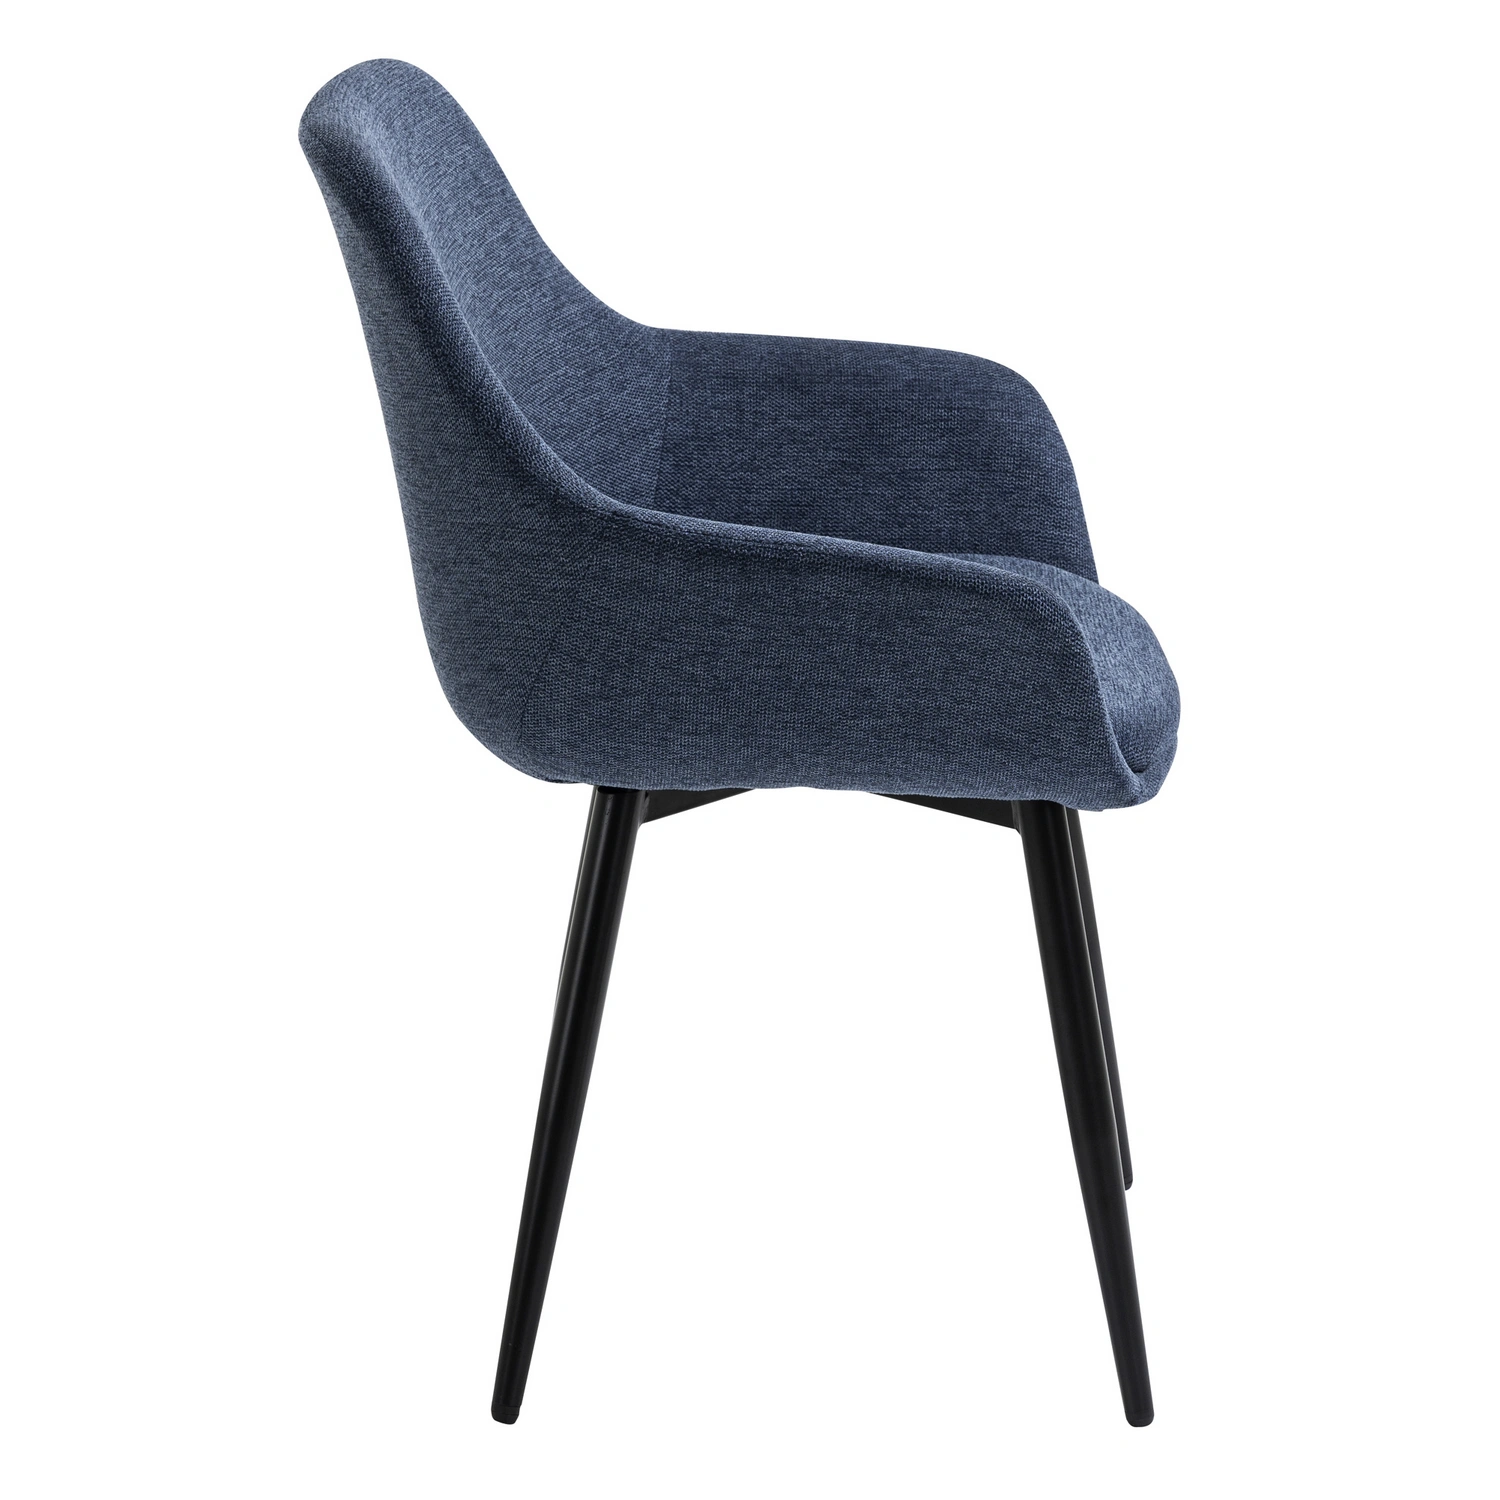 SalesFever Stuhl, 86 stk Höhe: cm, dunkelblau/schwarz, 2